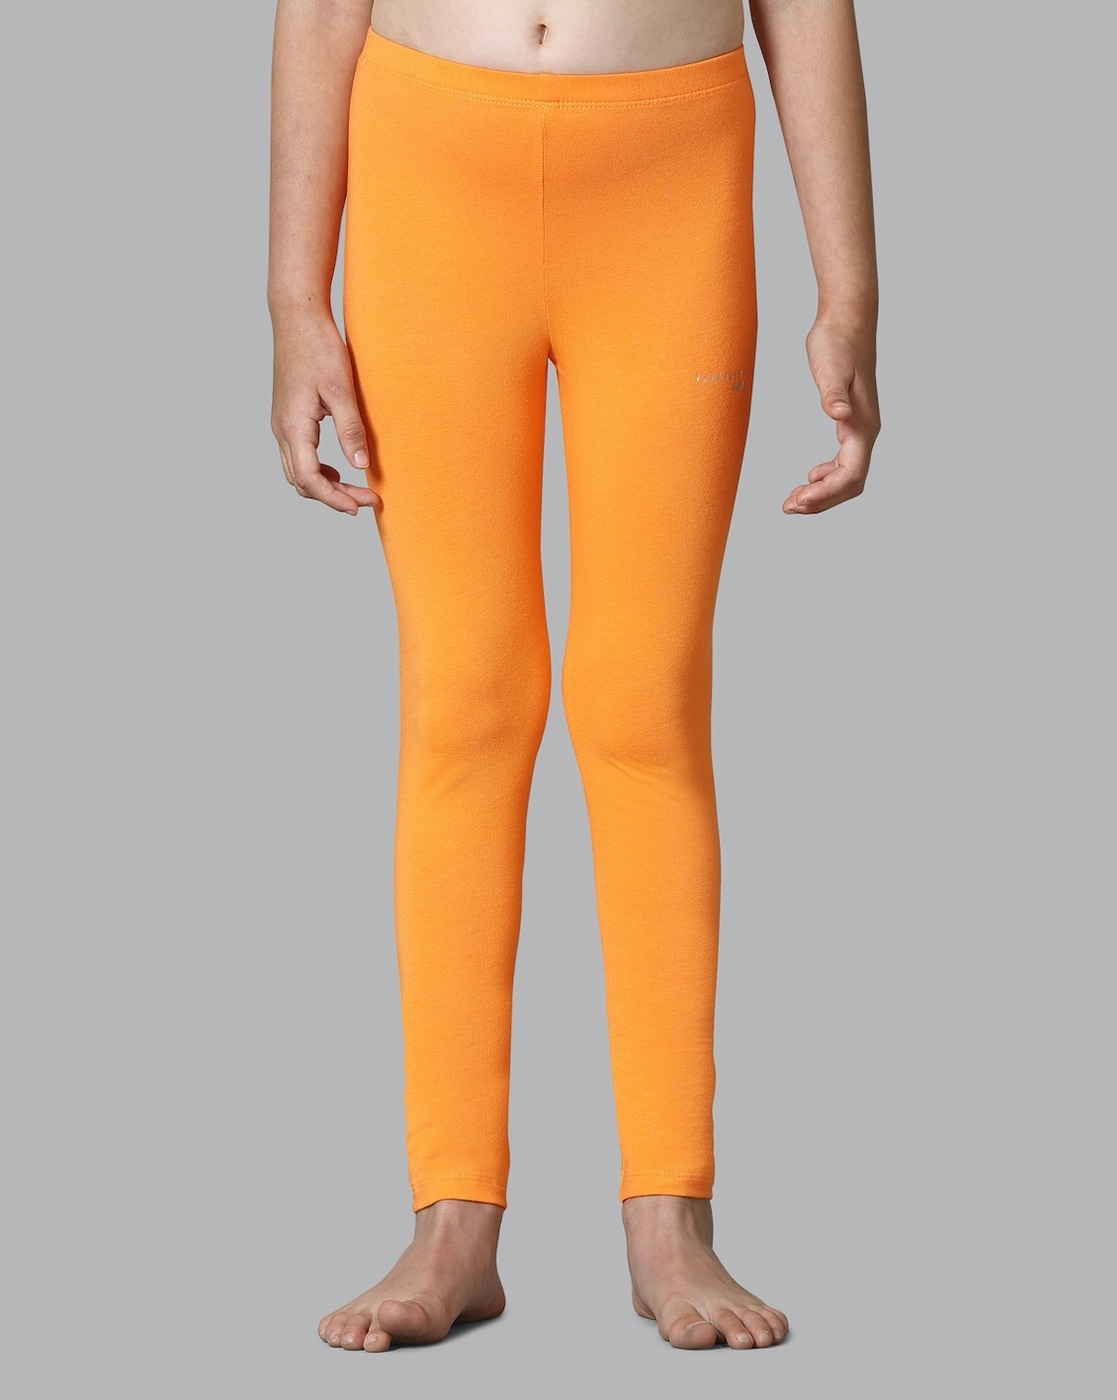 Buy Orange Leggings for Girls by VAN HEUSEN Online